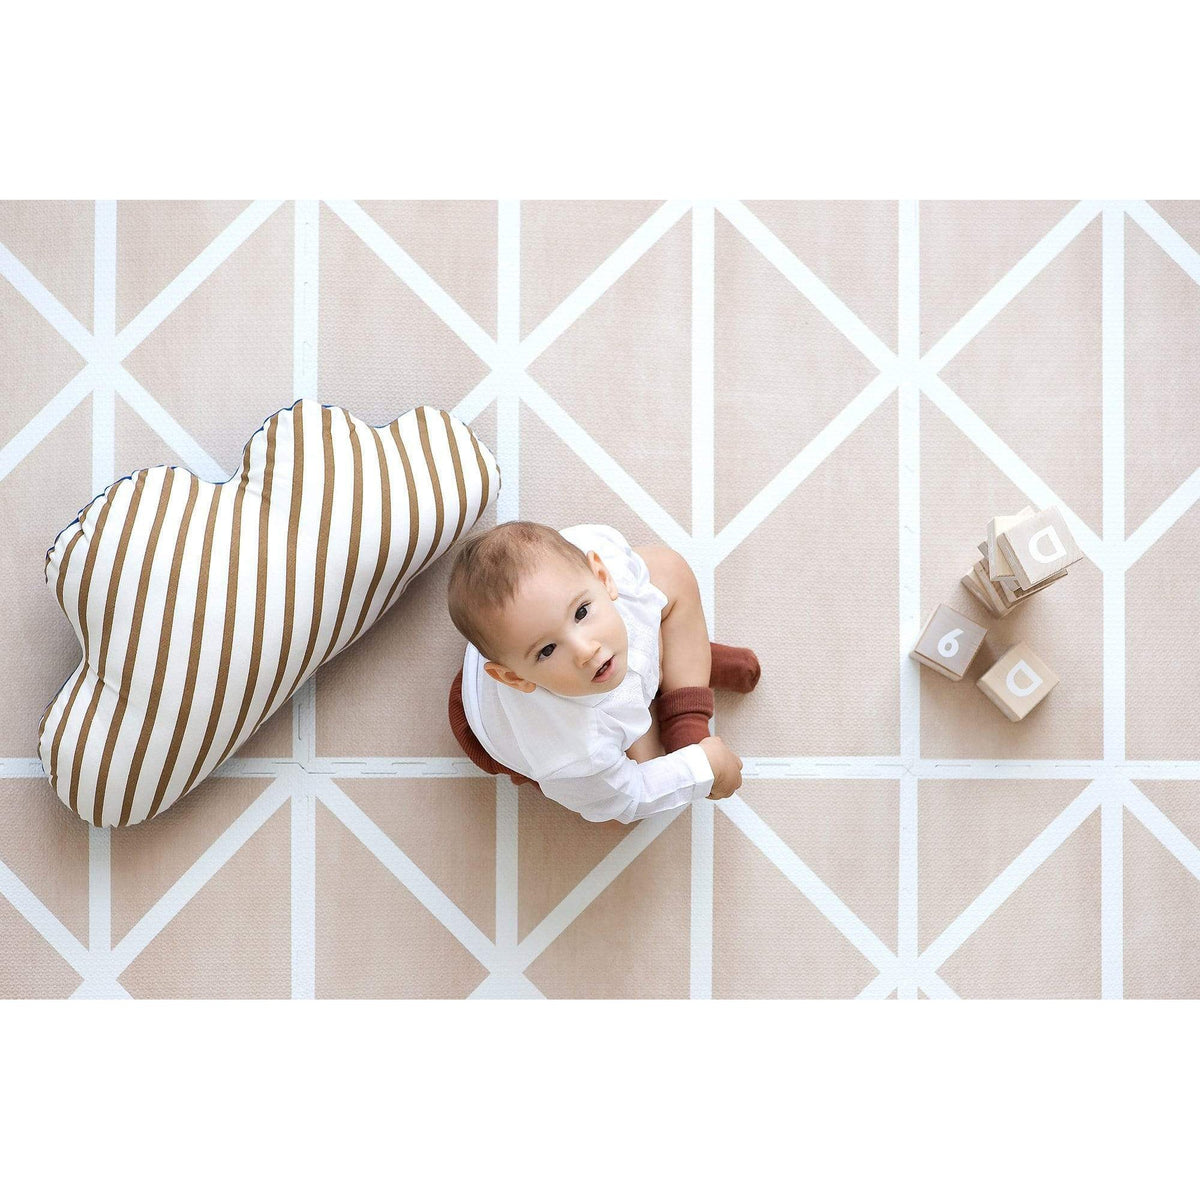 Toddlekind Prettier Playmat Nordic Clay 120x180cm - 6 Tiles &amp; 12 Edging Borders